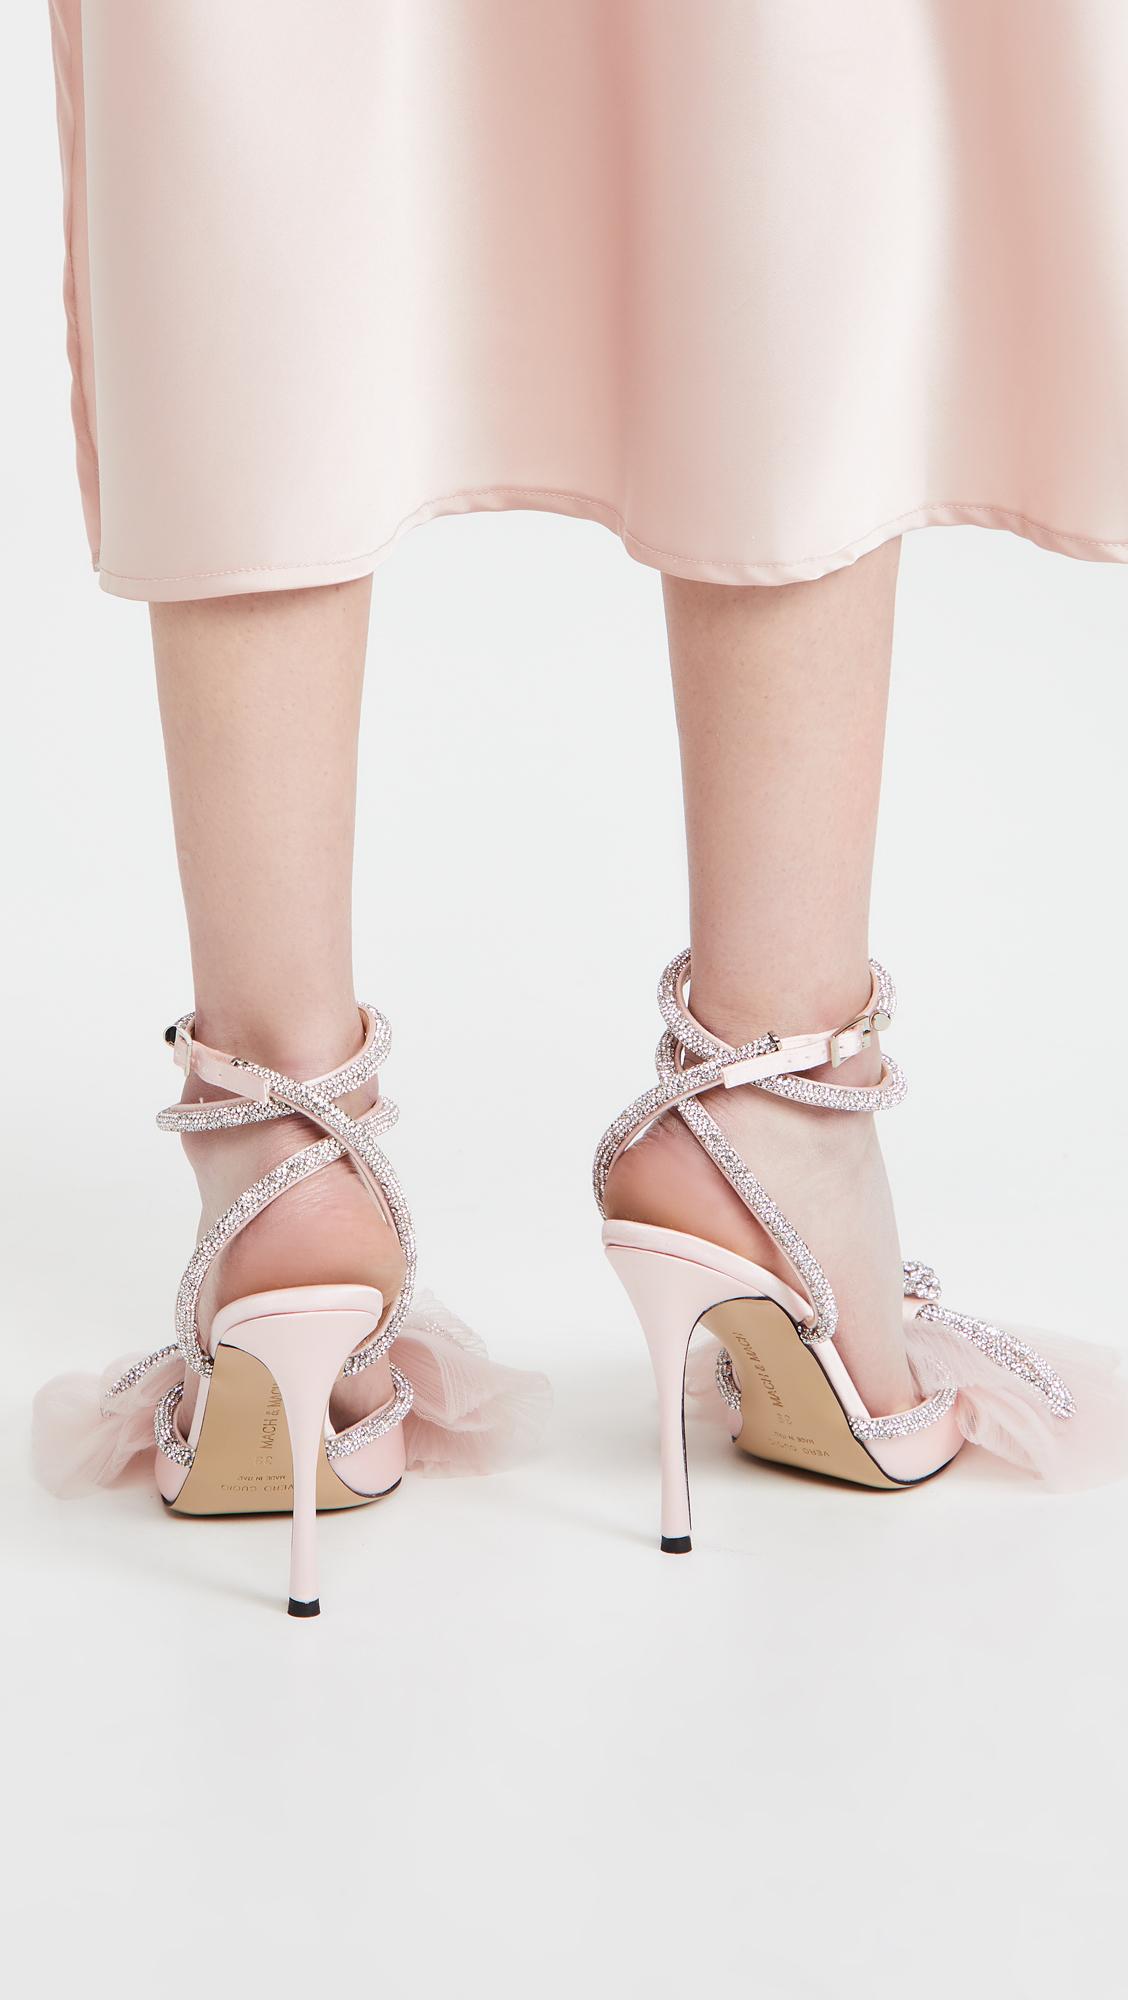 Mach & Mach Satin Double Crystal Bow High Heels in Powder Pink (Pink) - Lyst